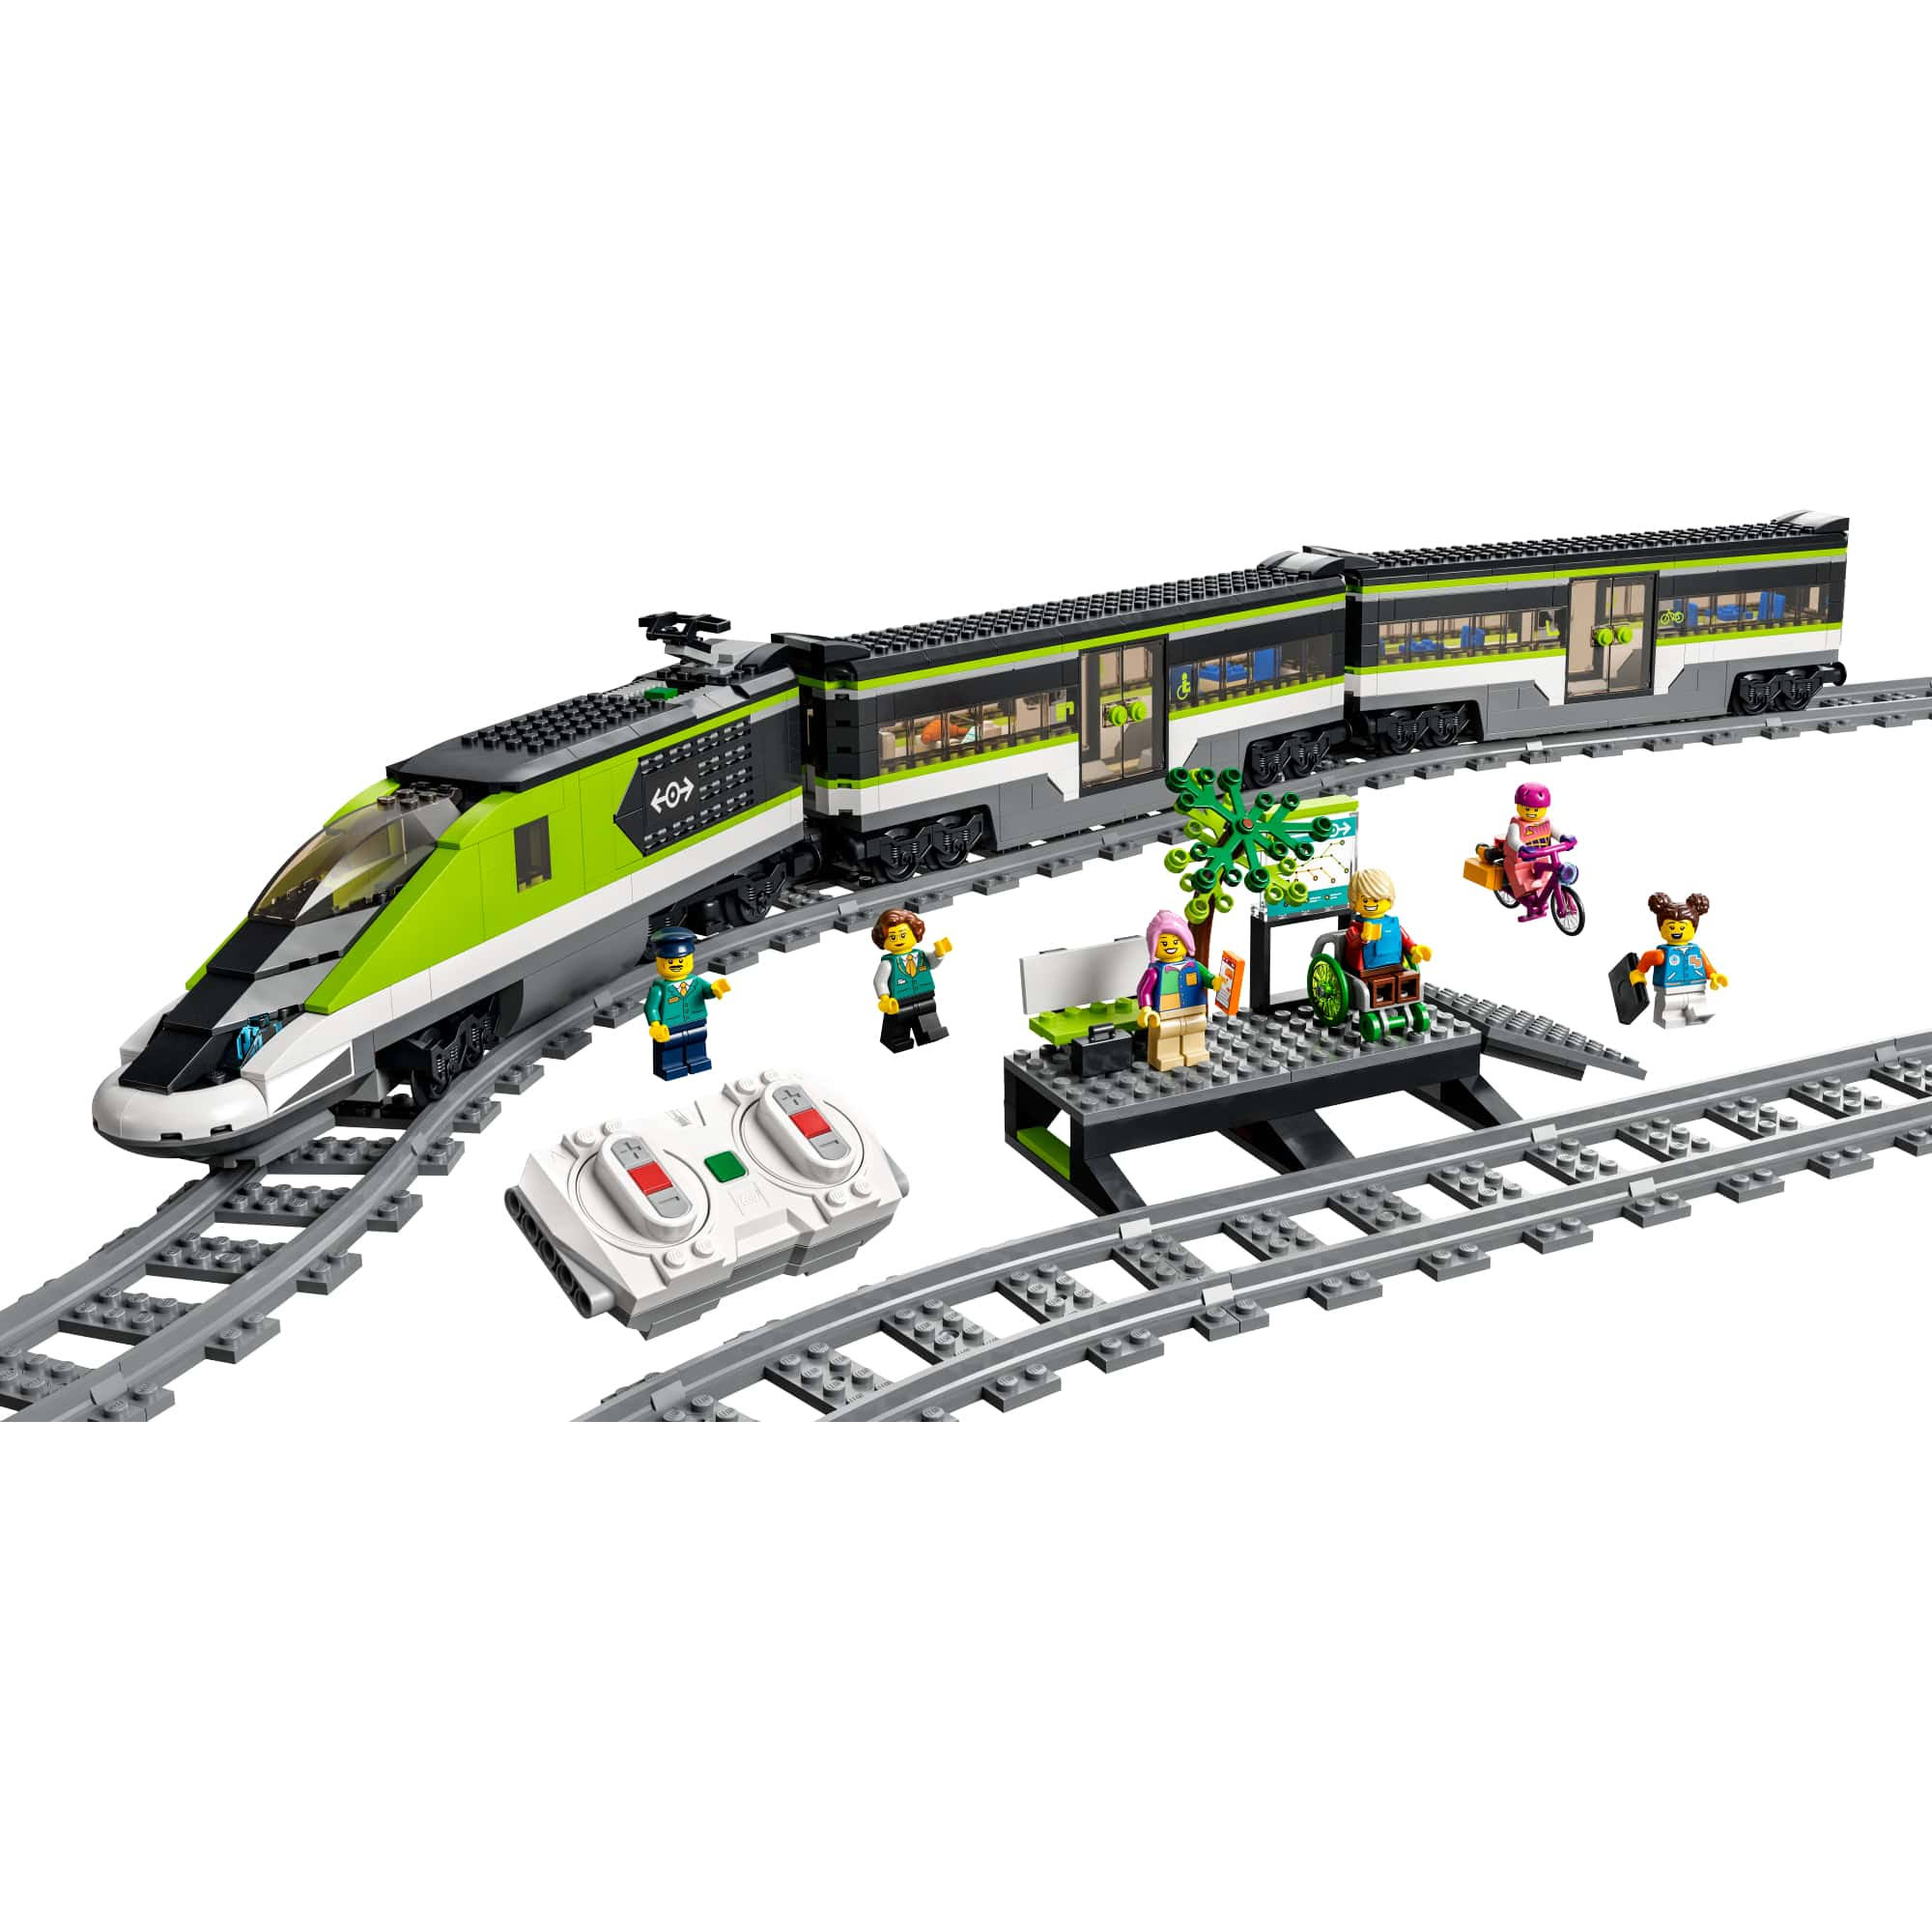 Lego 60337 City Express Passenger Train